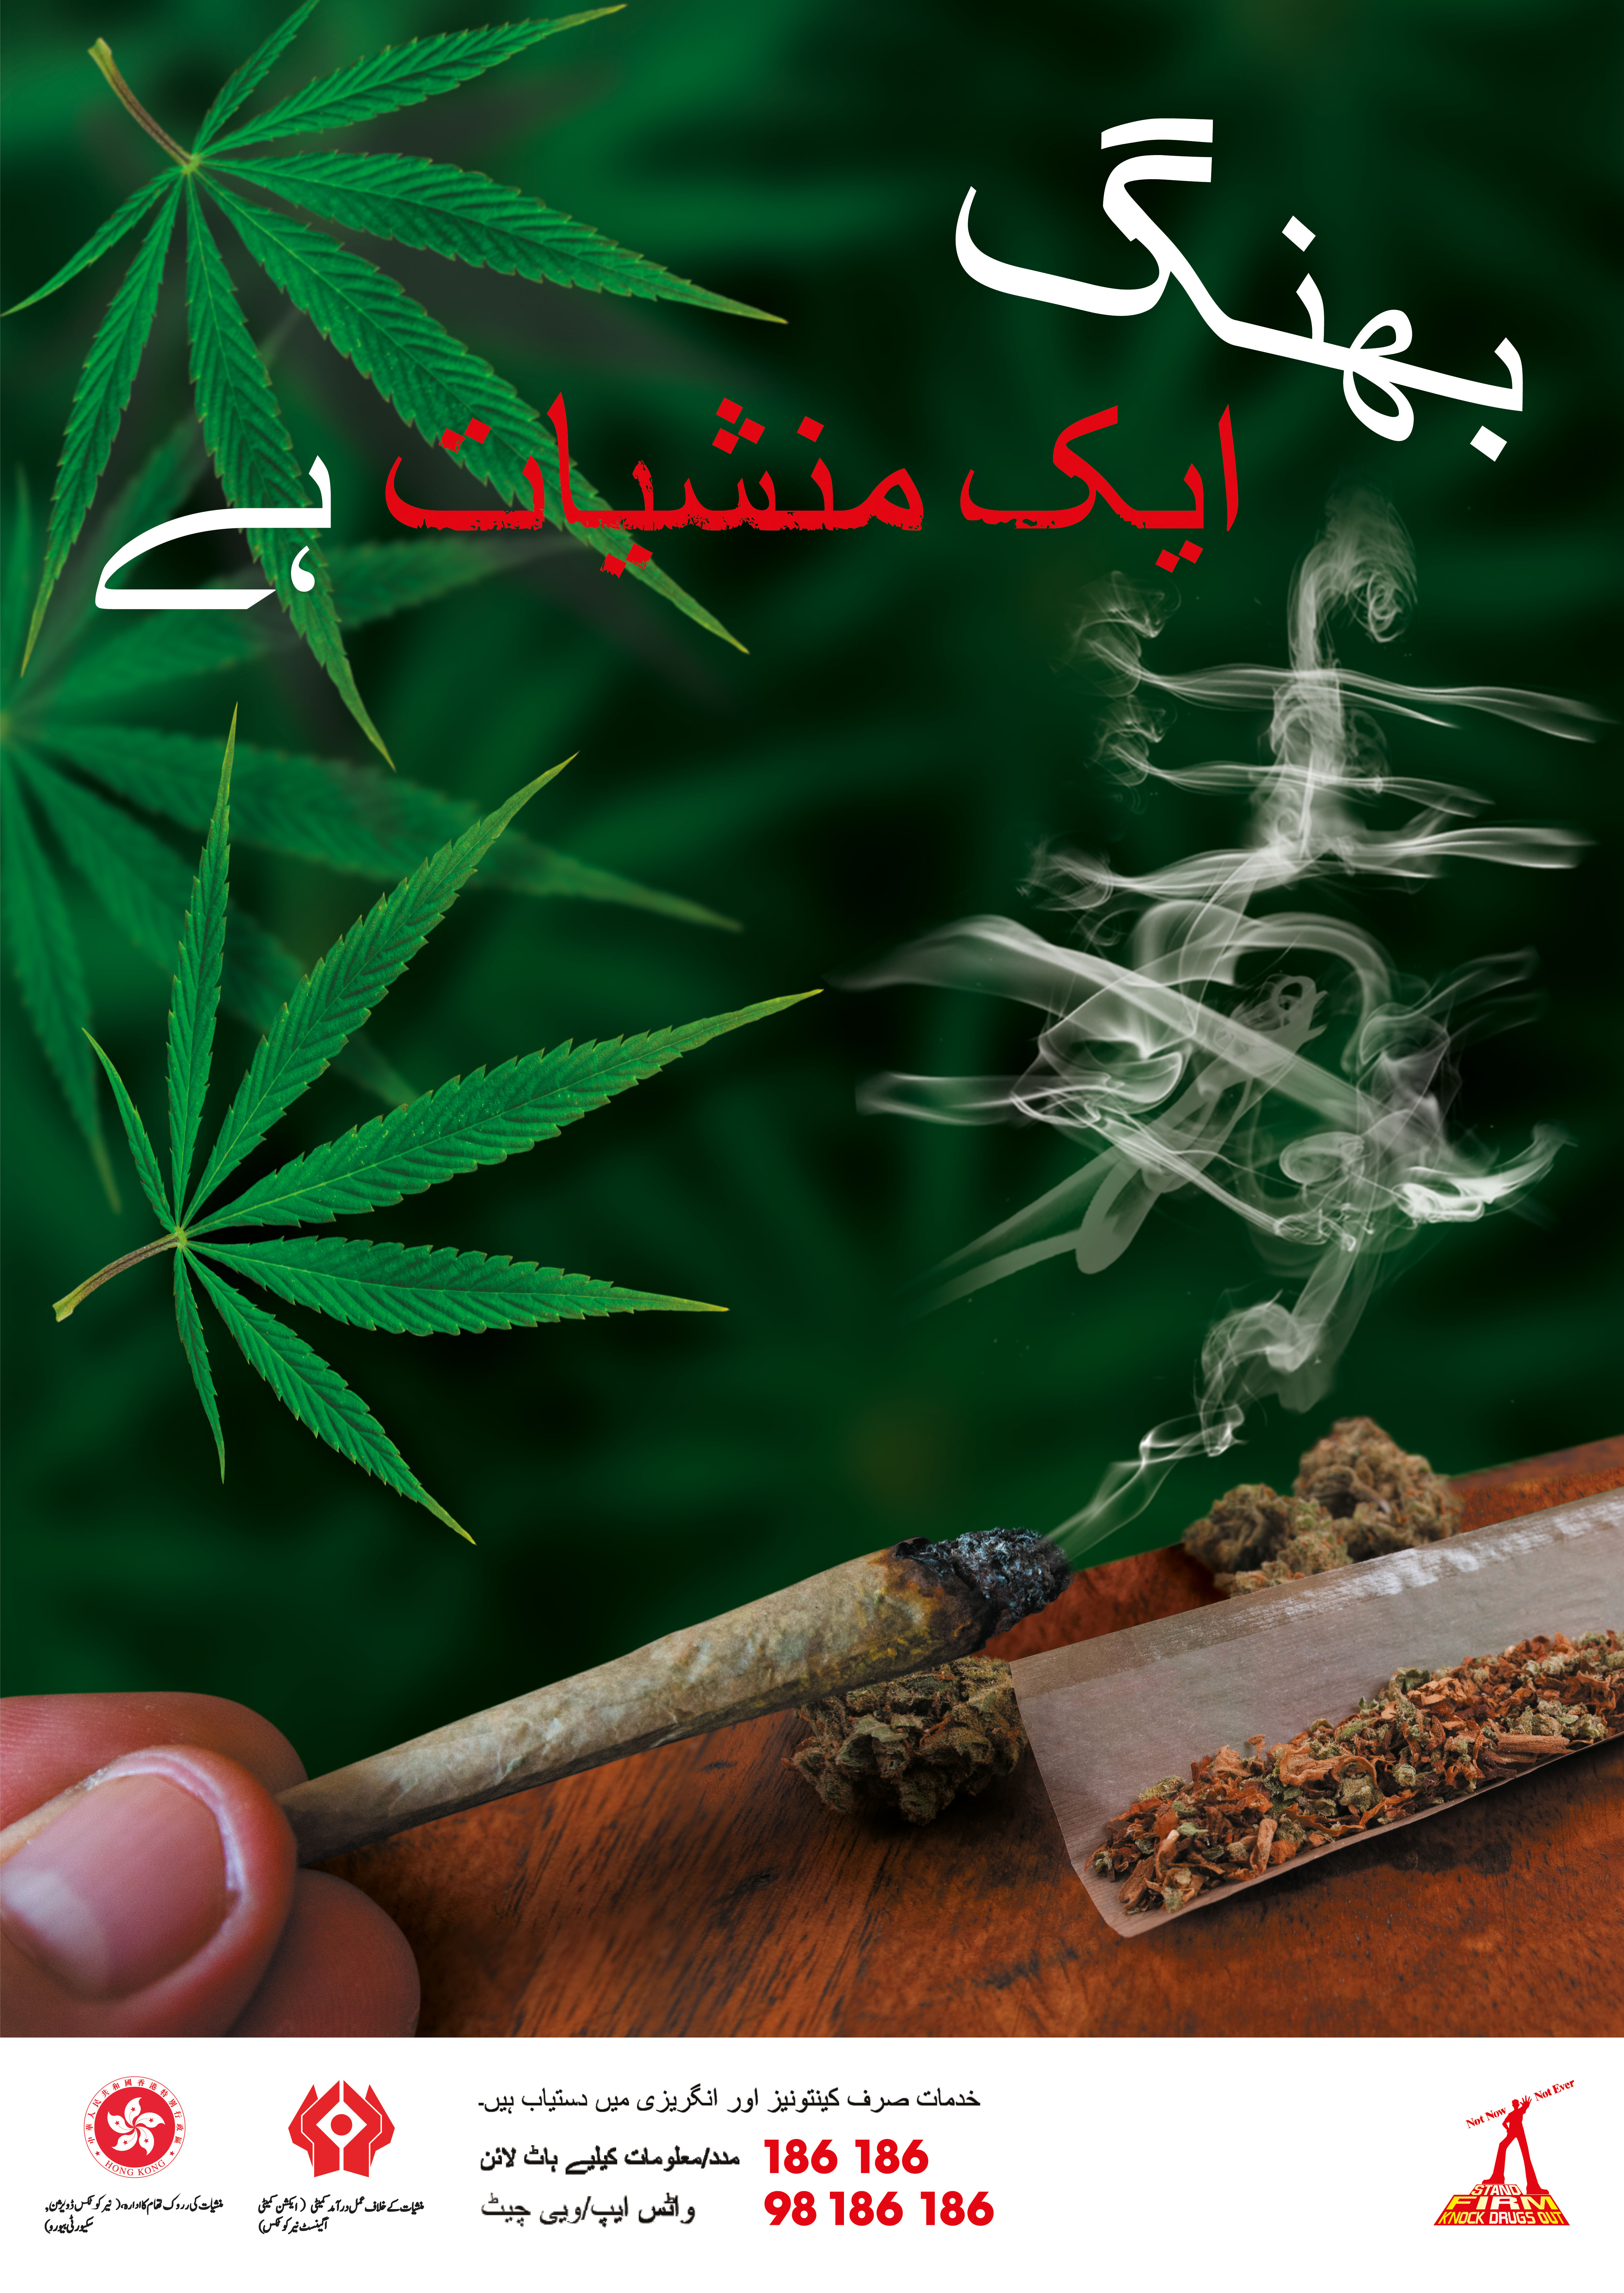 Anti-drug poster "Cannabis is a drug" - Urdu version